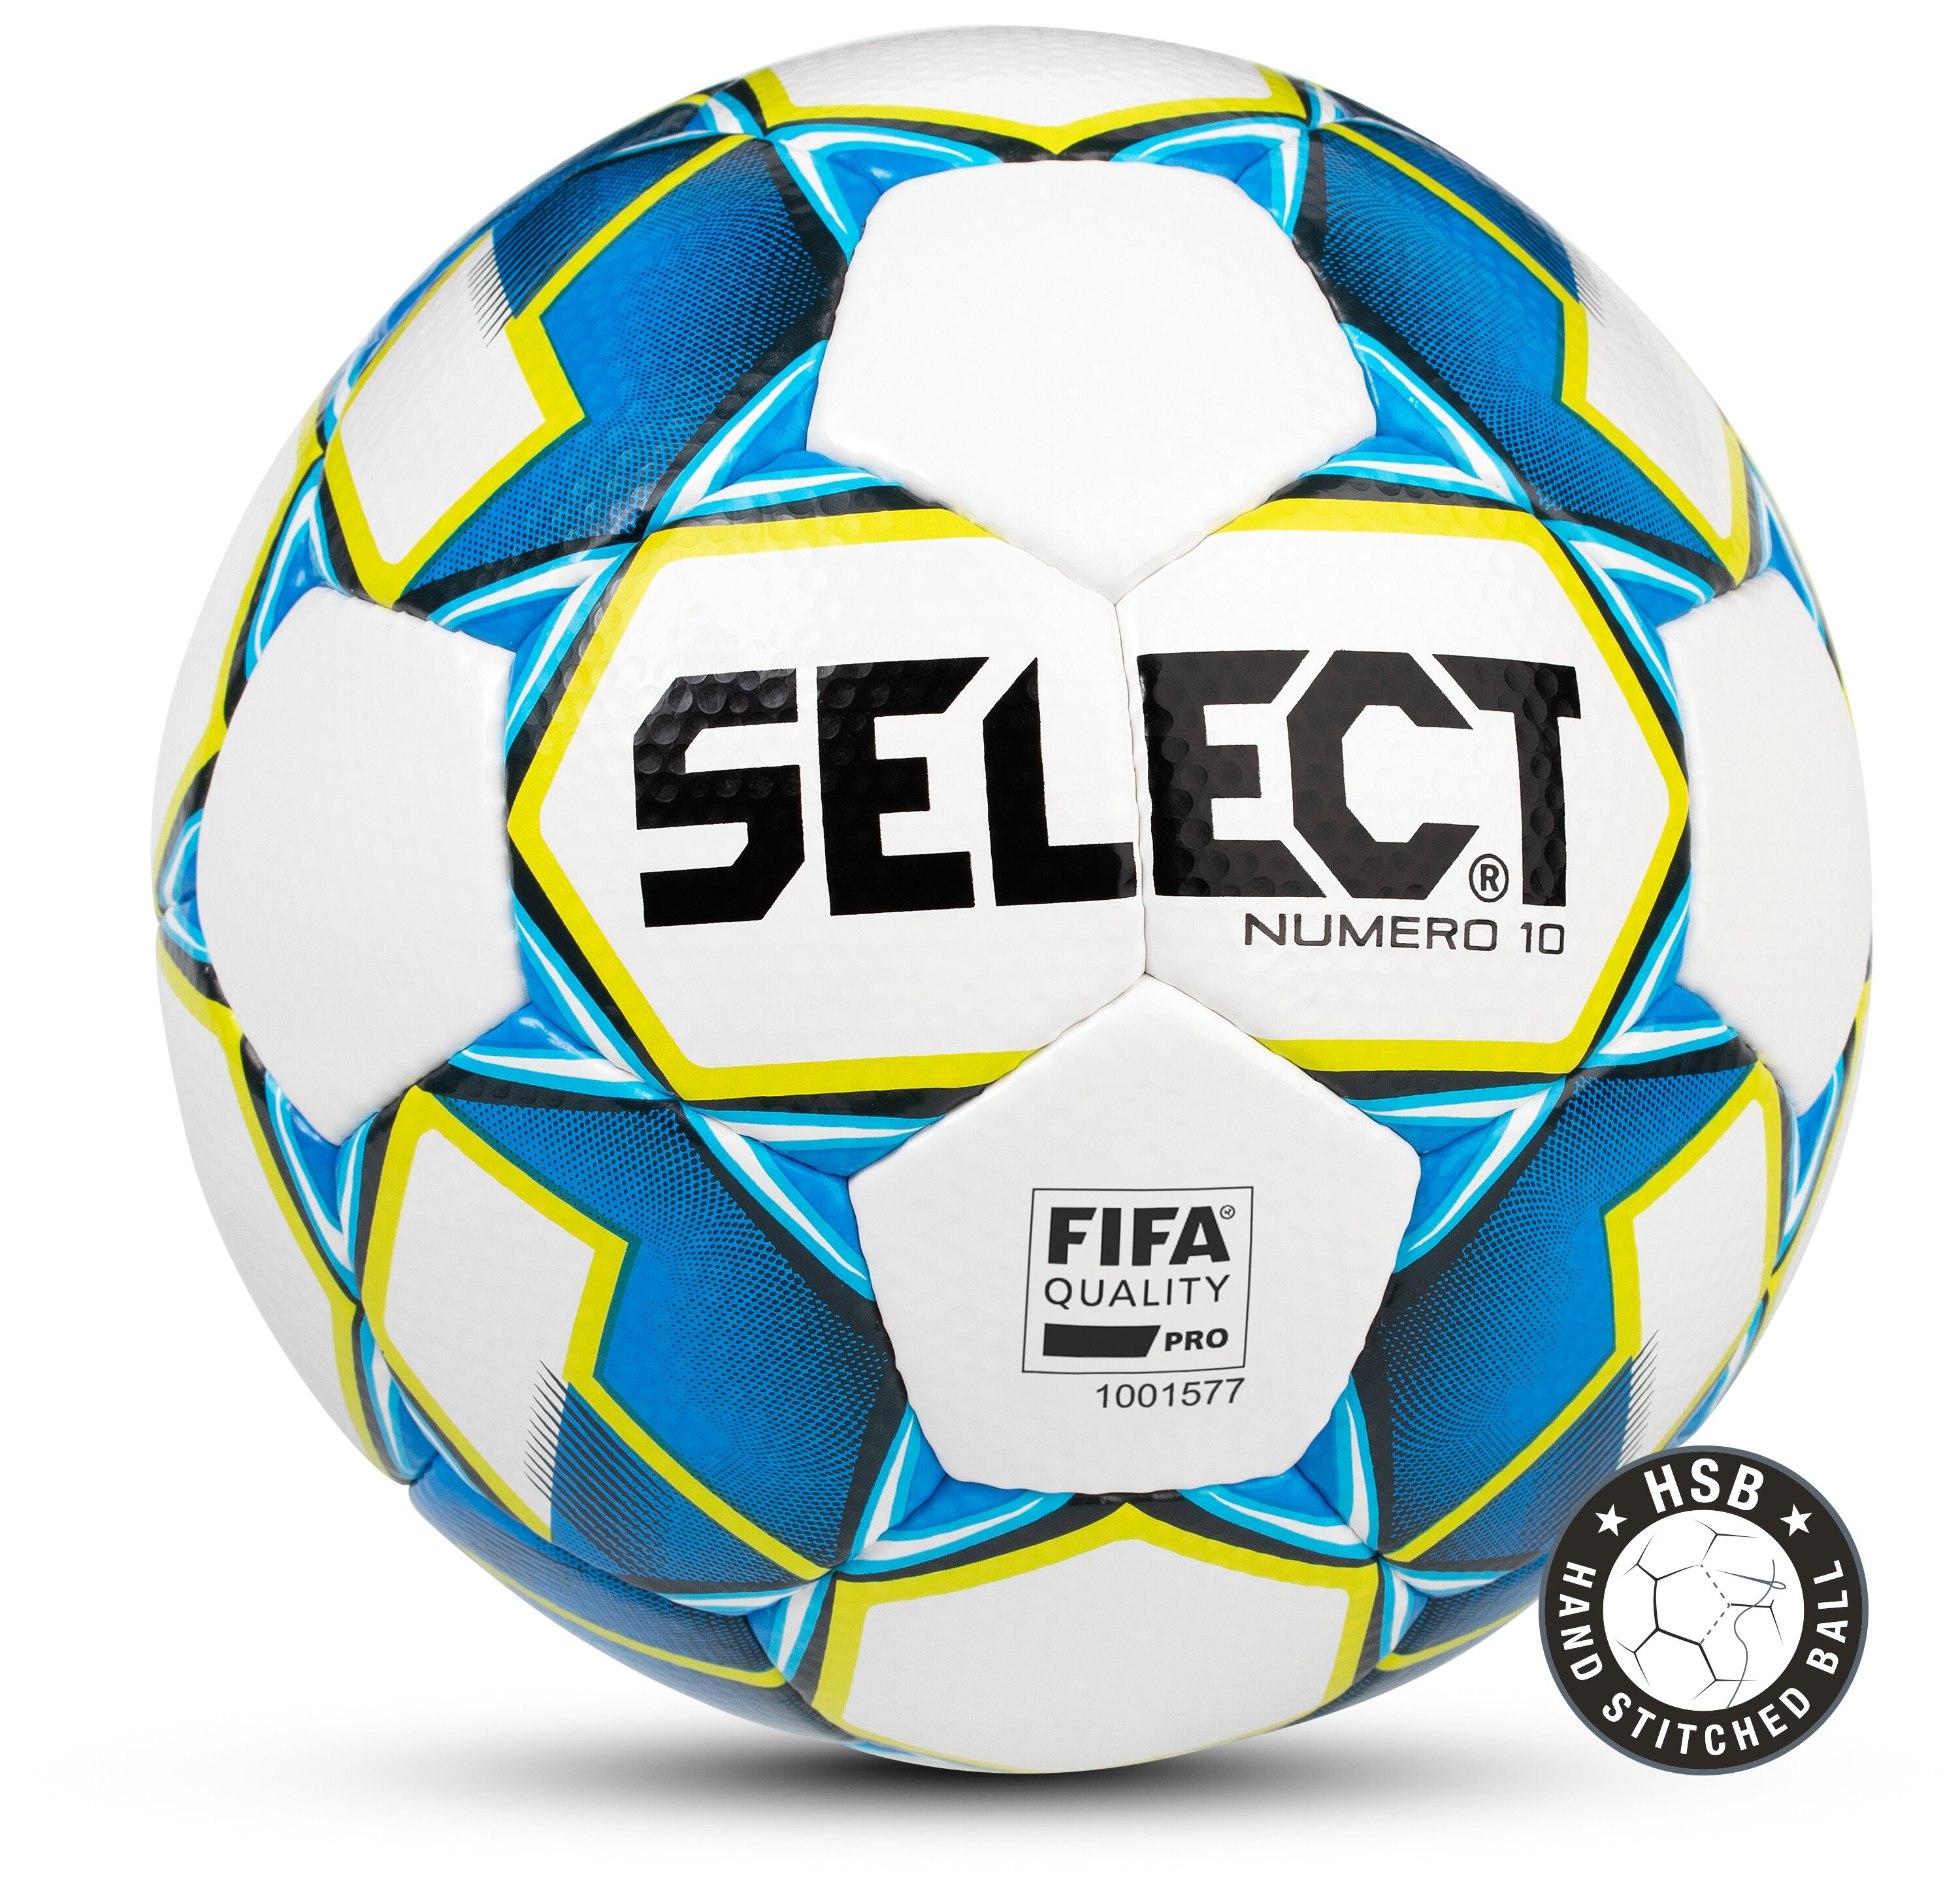 М'яч футбольний Select Numero 10 FIFA білo-синьо-салат 